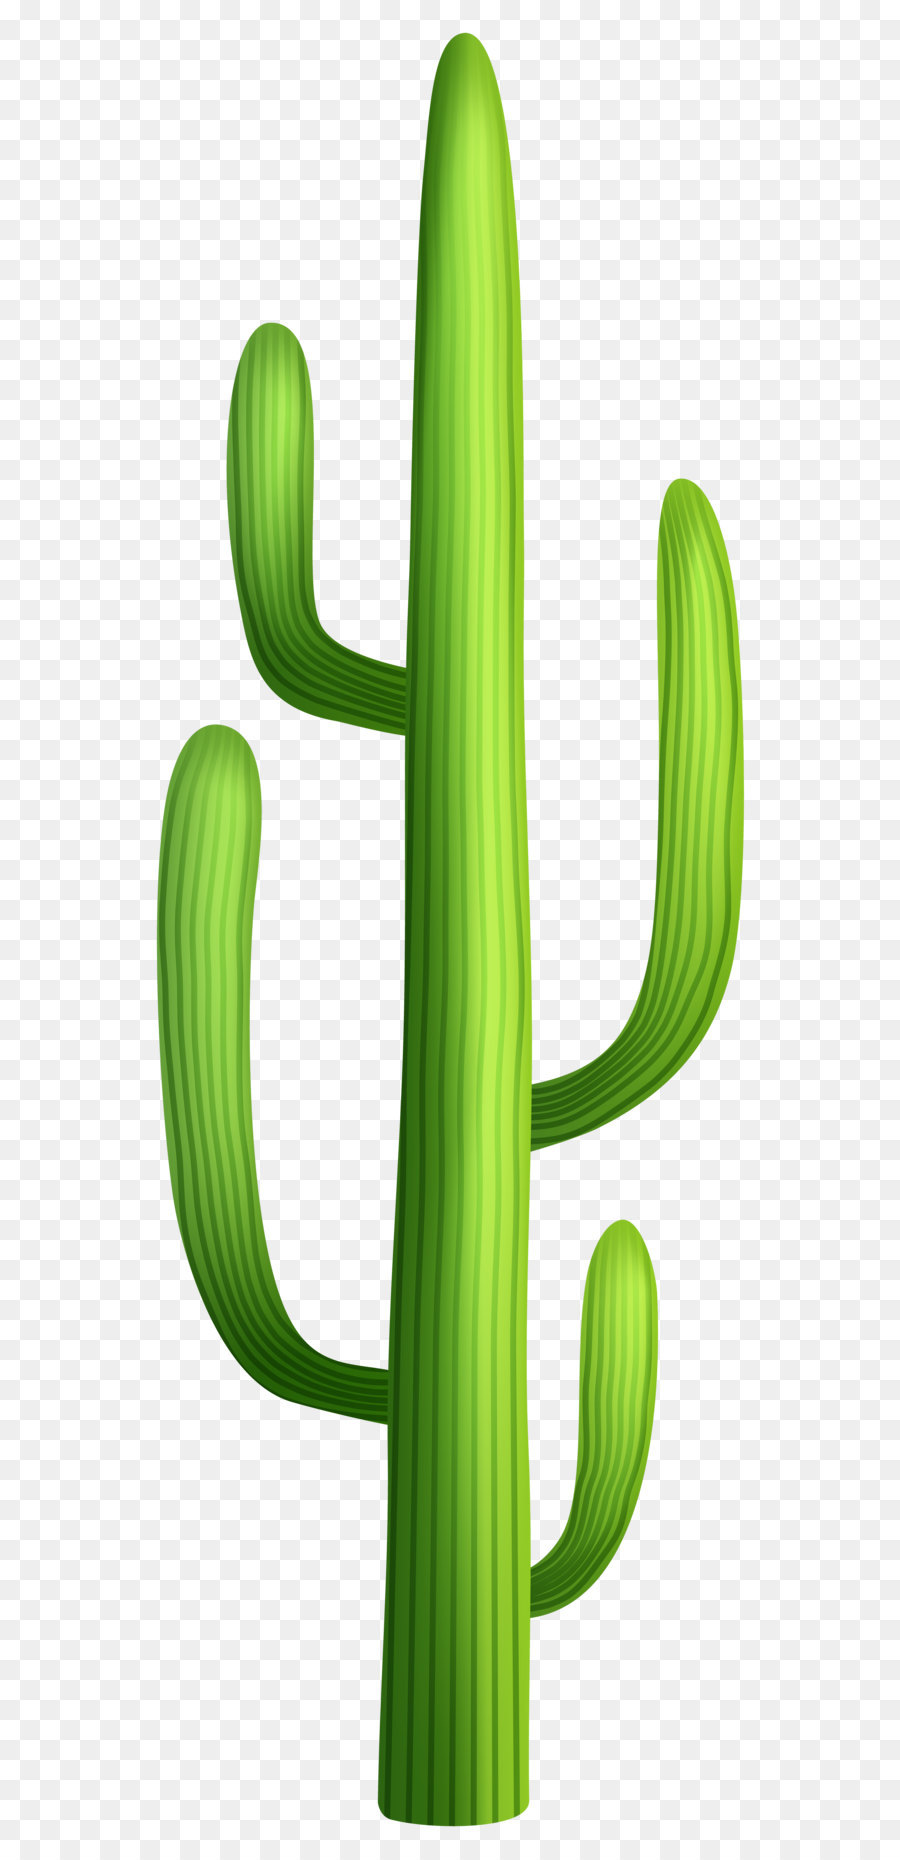 Desert Clip art - Desert Cactus Transparent PNG Clip Art Image png download - 2821*8000 - Free Transparent Cactaceae png Download.